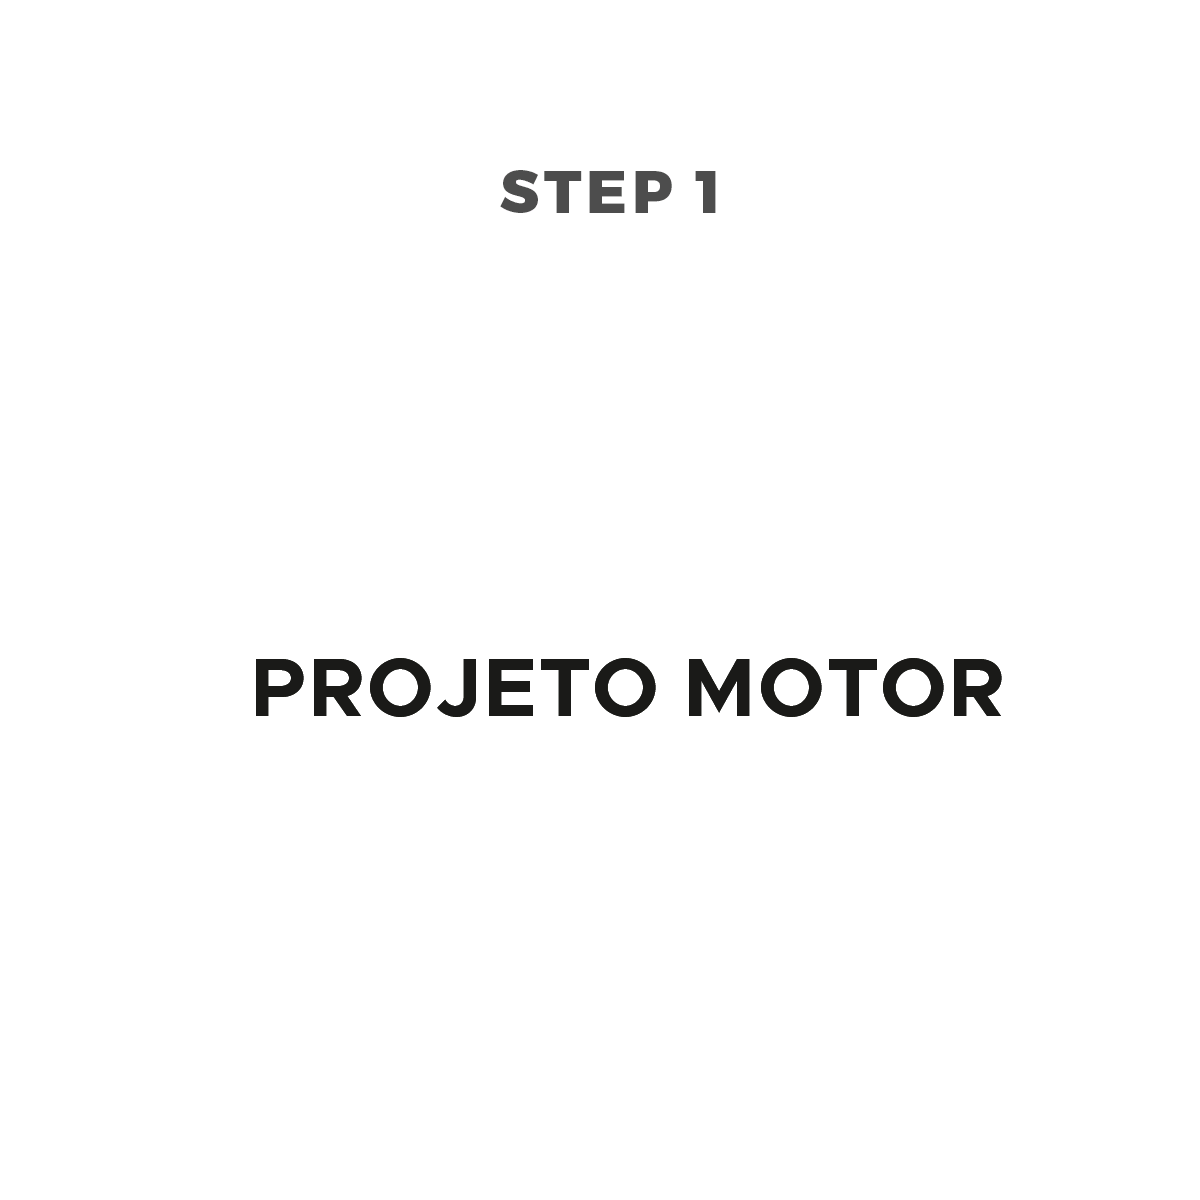 Projeto Motor Logo Steps